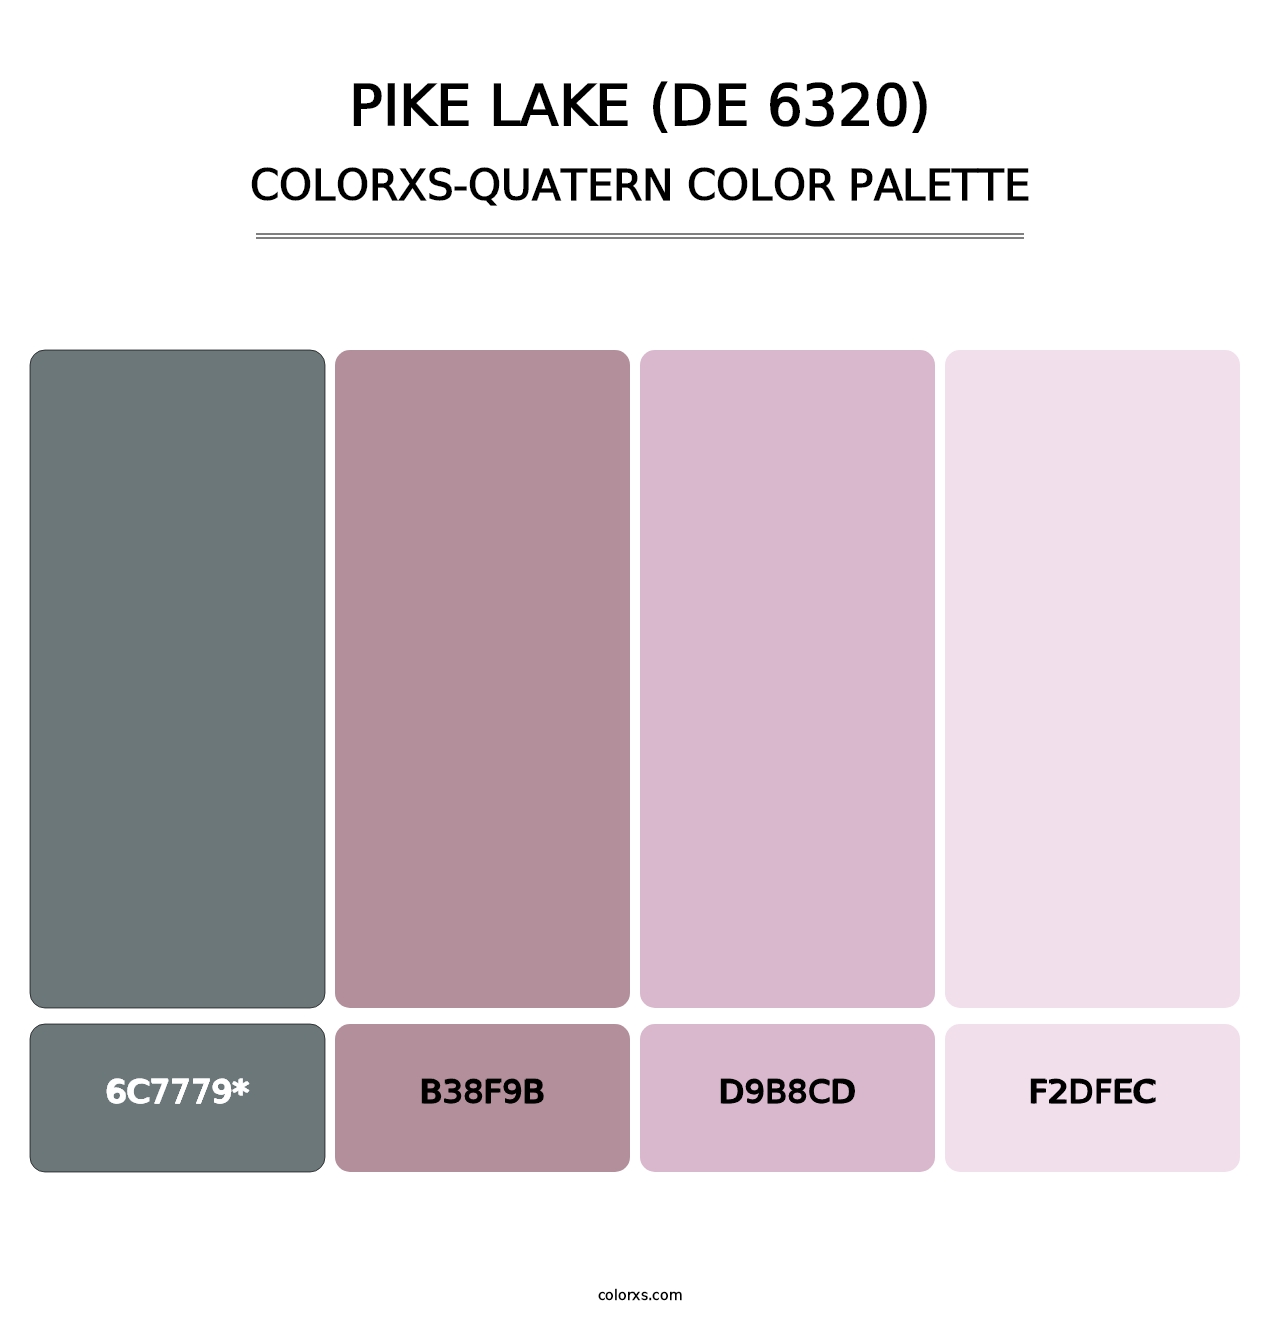 Pike Lake (DE 6320) - Colorxs Quatern Palette